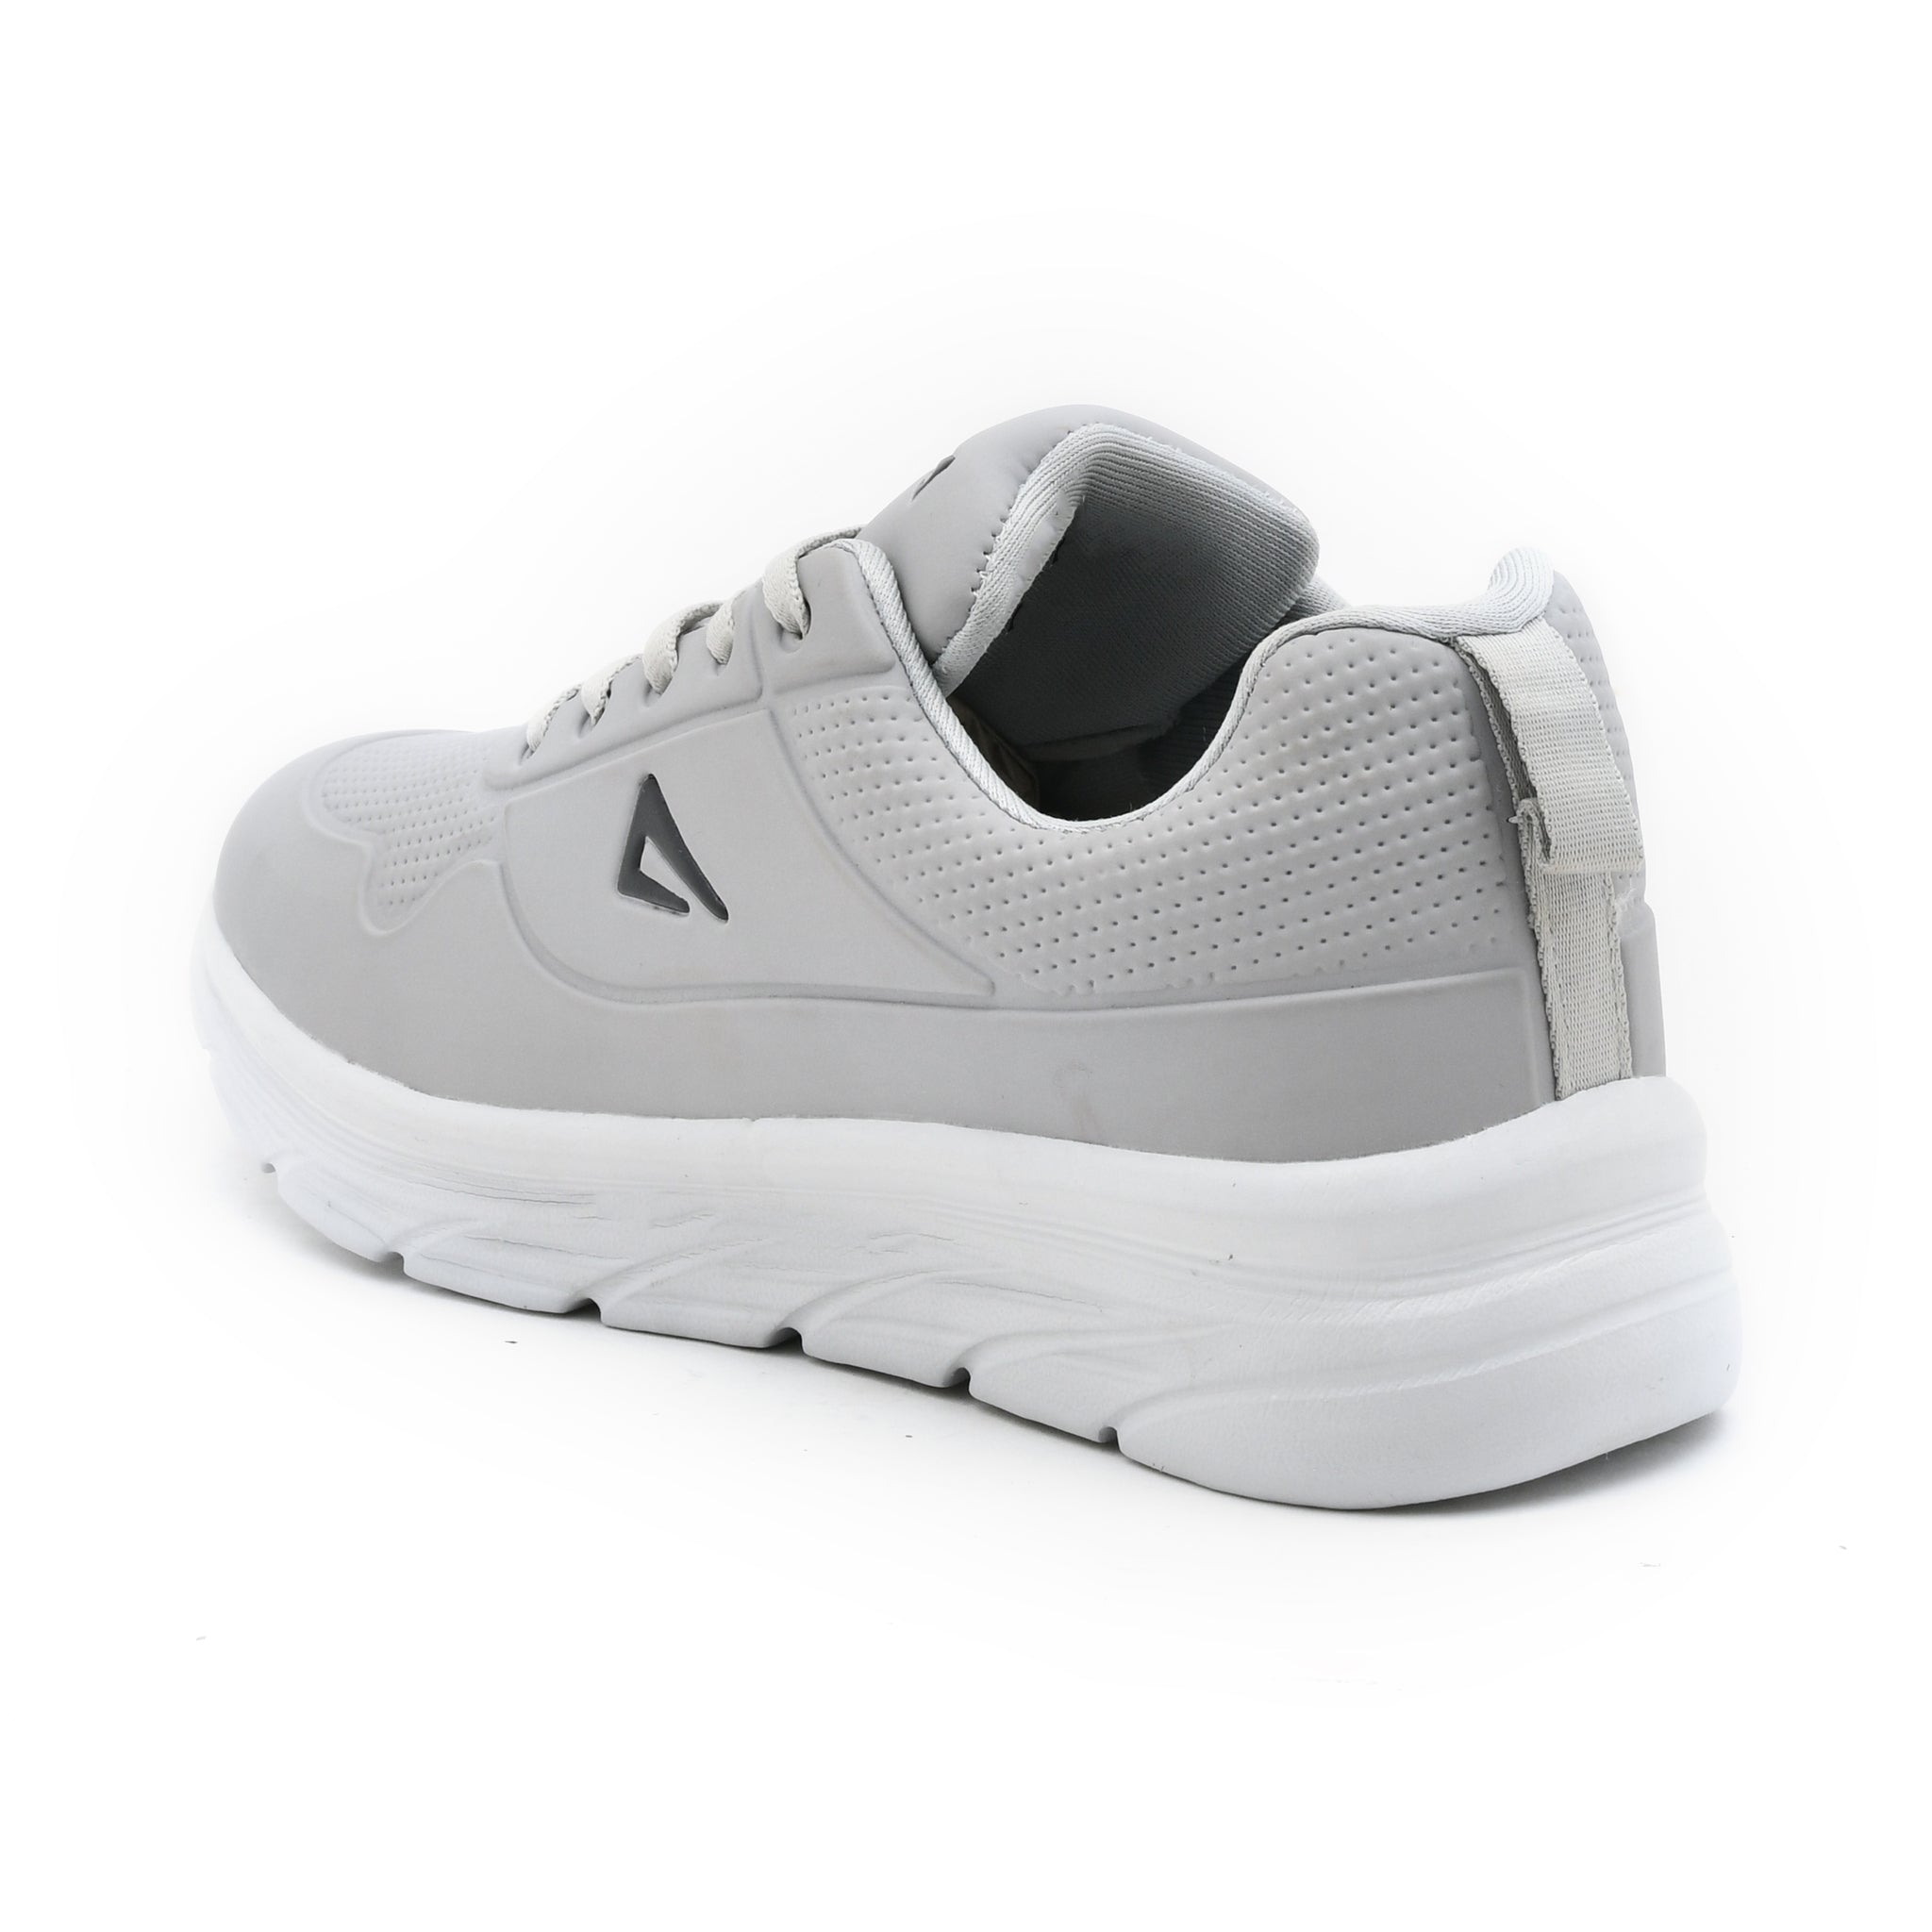 Impakto  Disruptor Sport Shoes Men's  Grey Walking Shoes